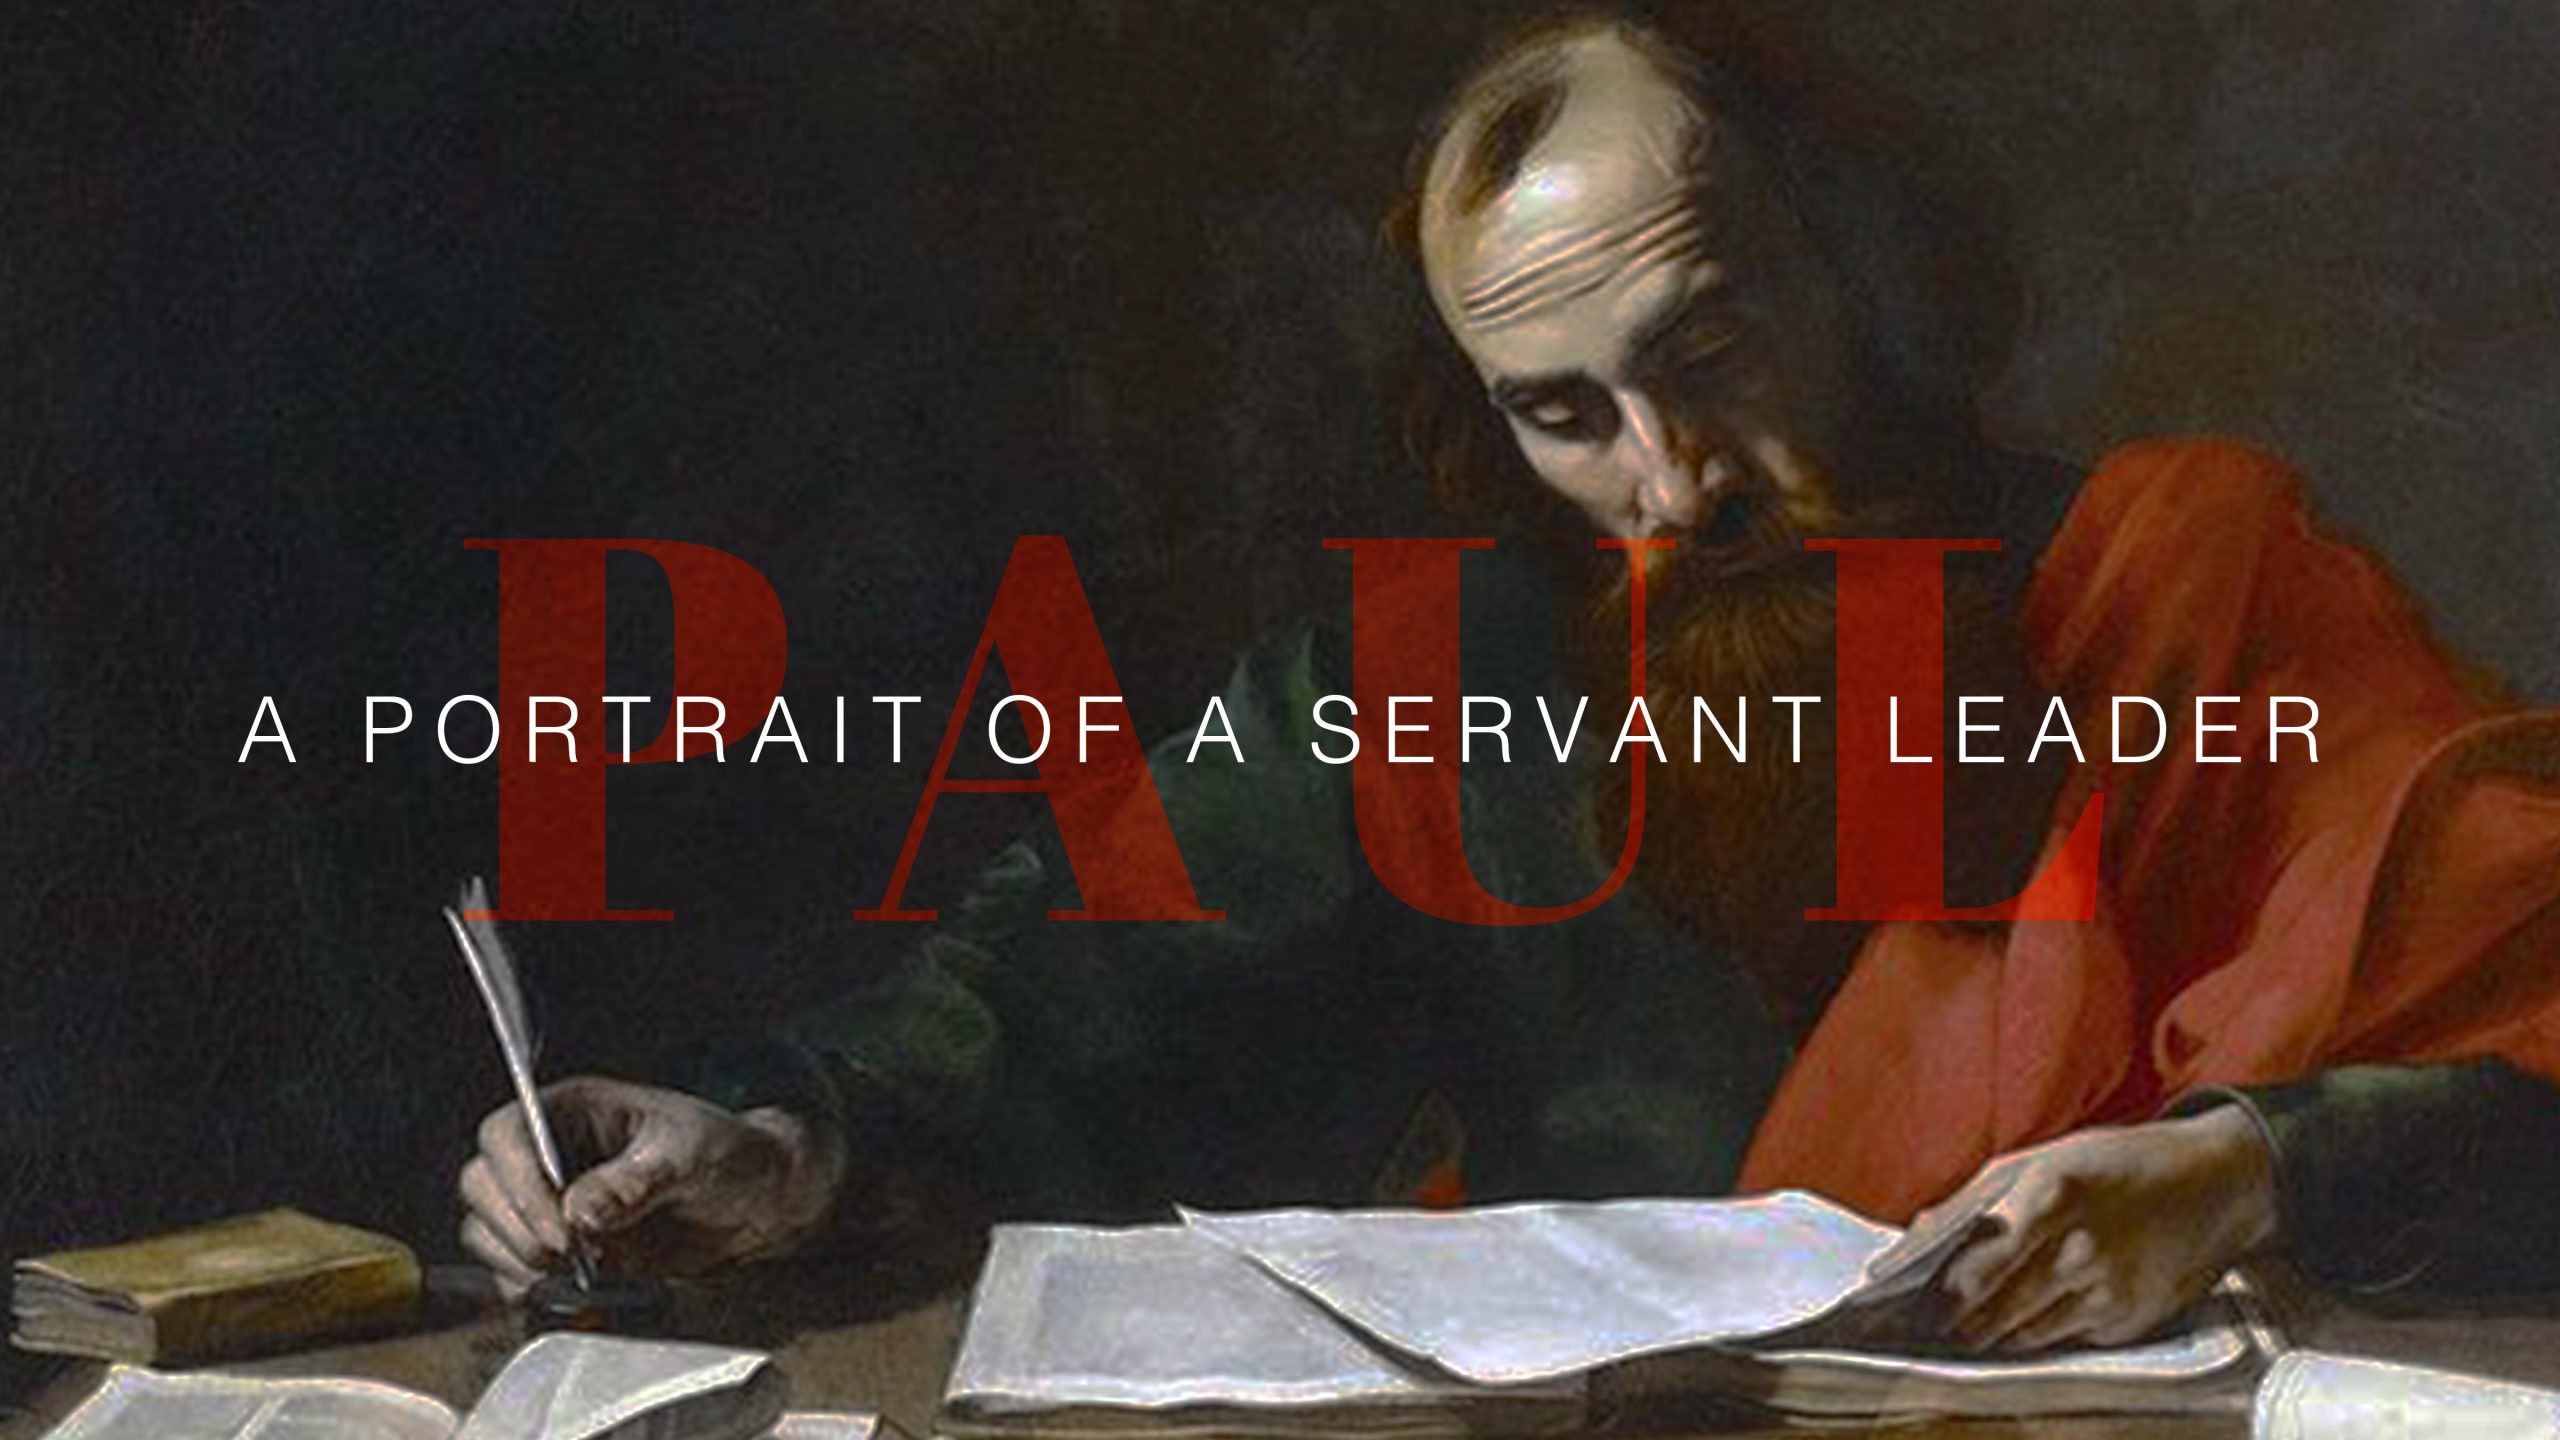 Paul: A Portrait of a Servant Leader